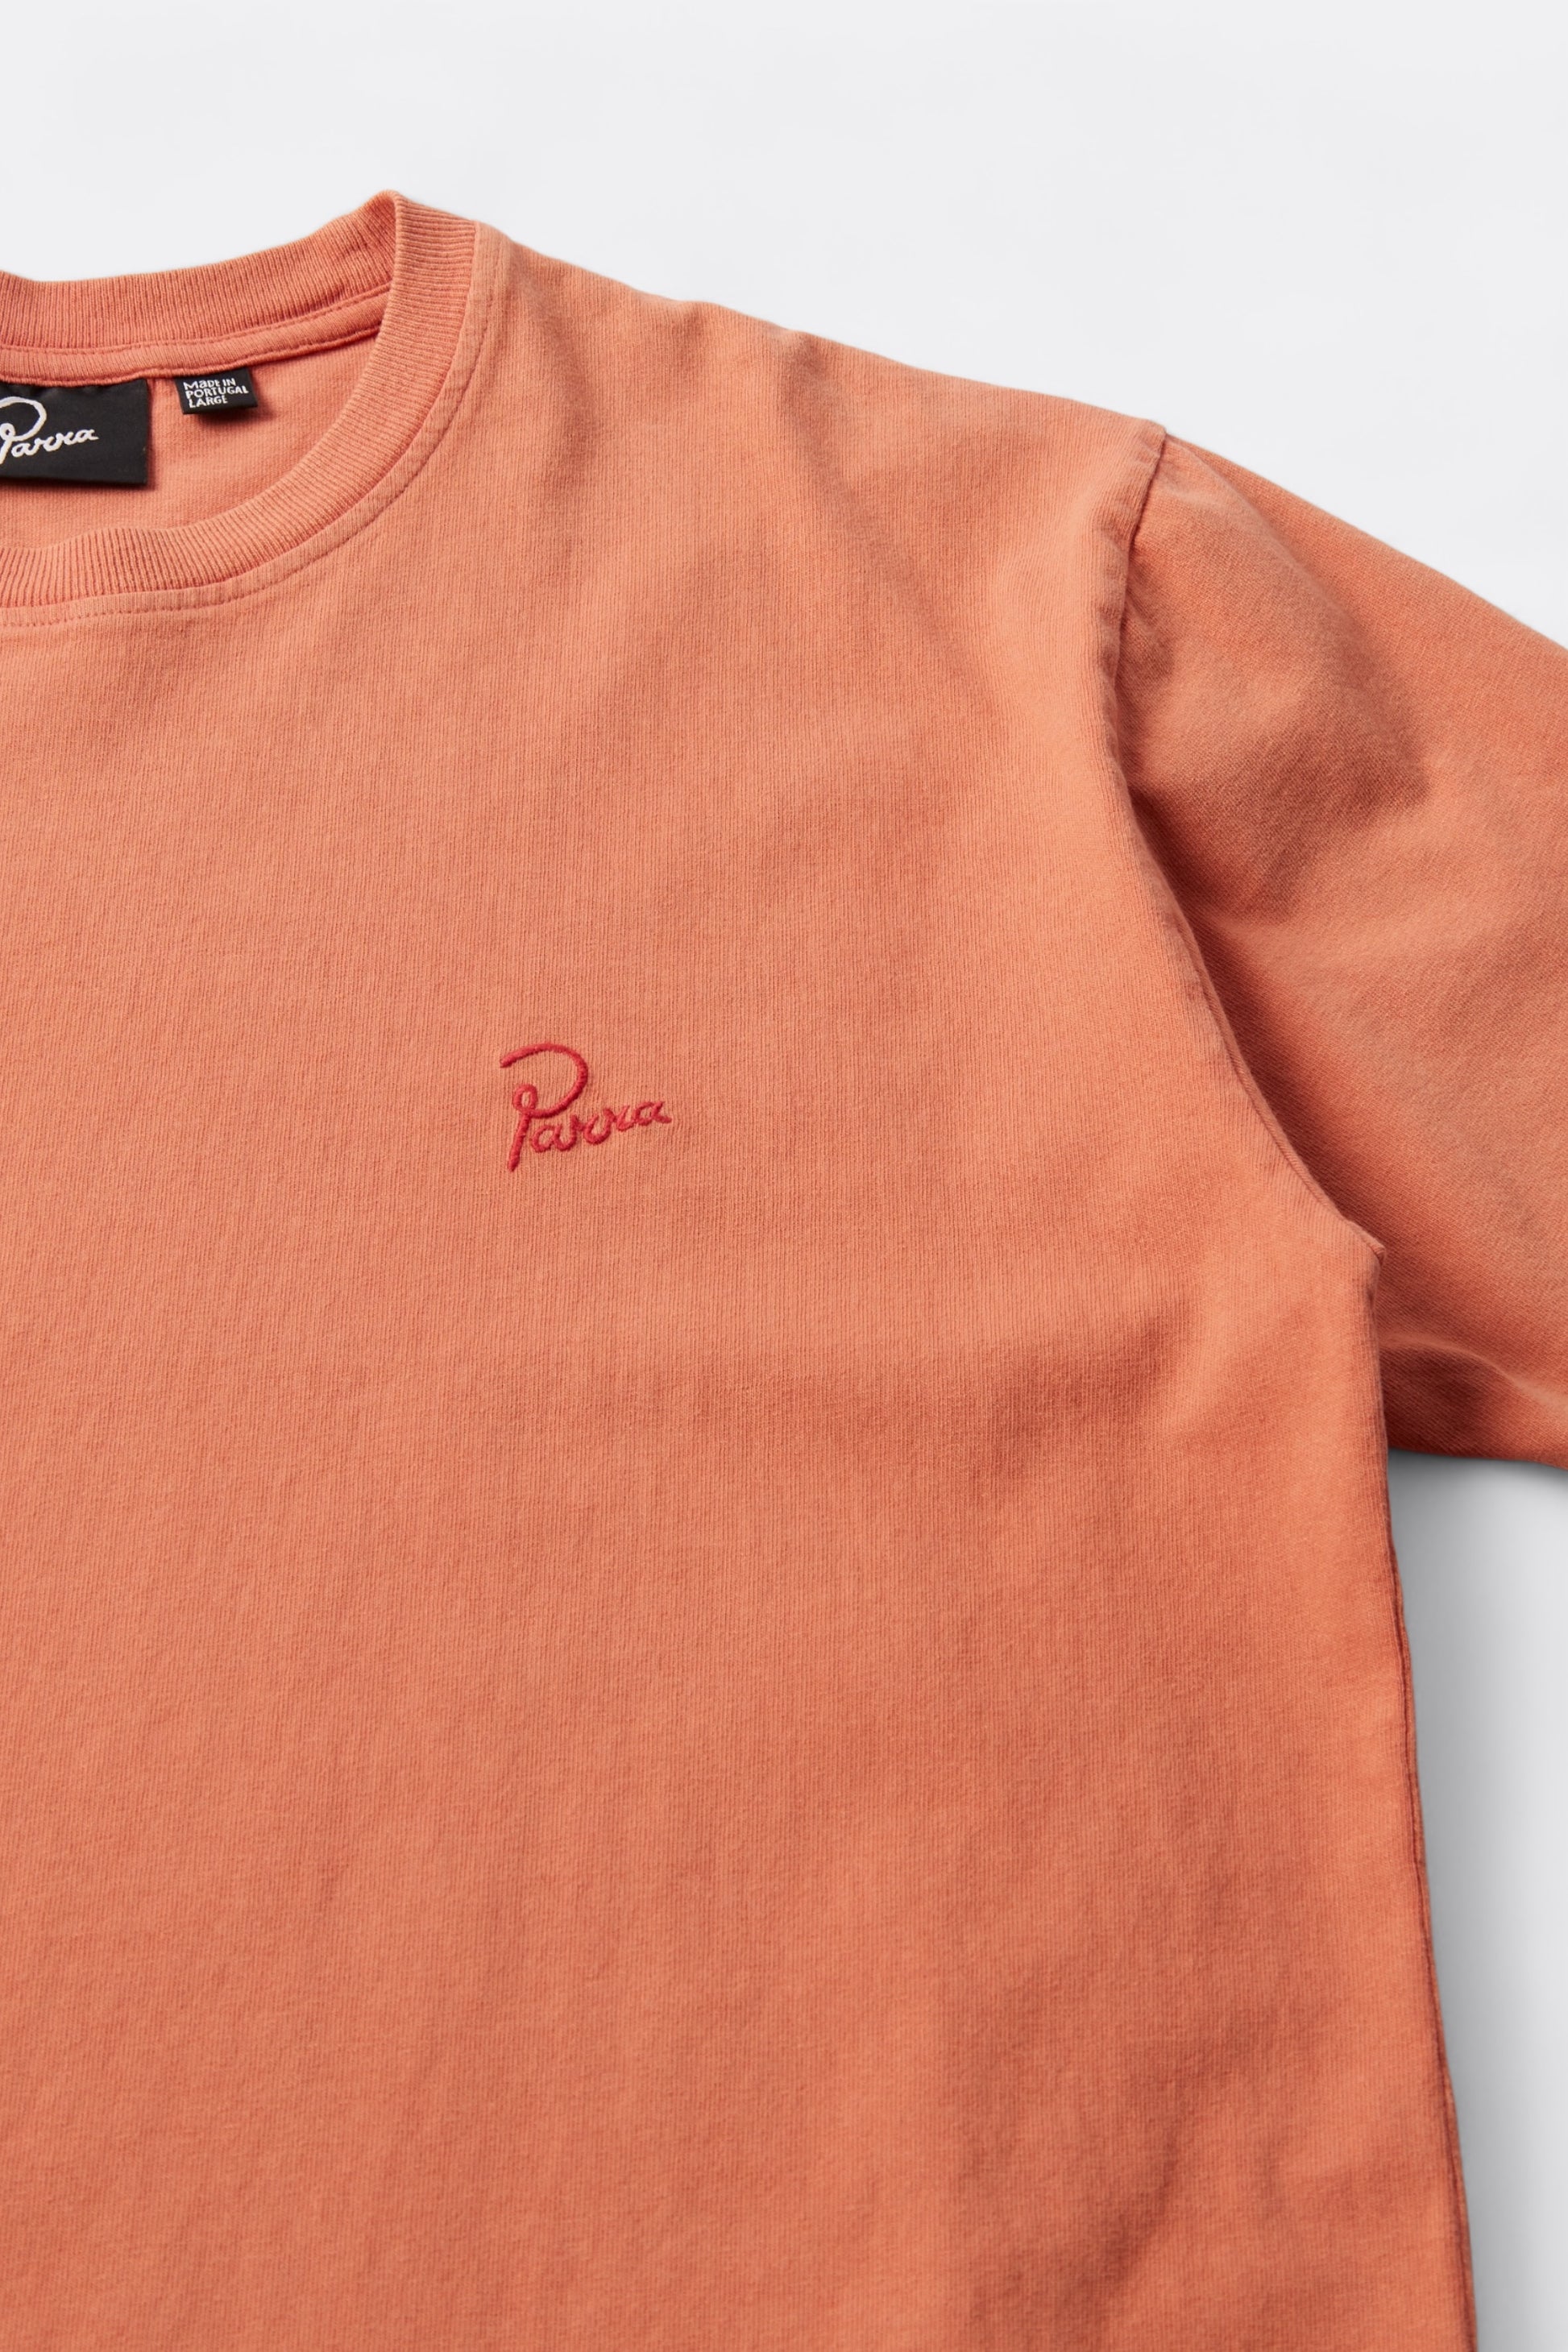 Parra - Script Logo T-Shirt (Washed Tangerine)